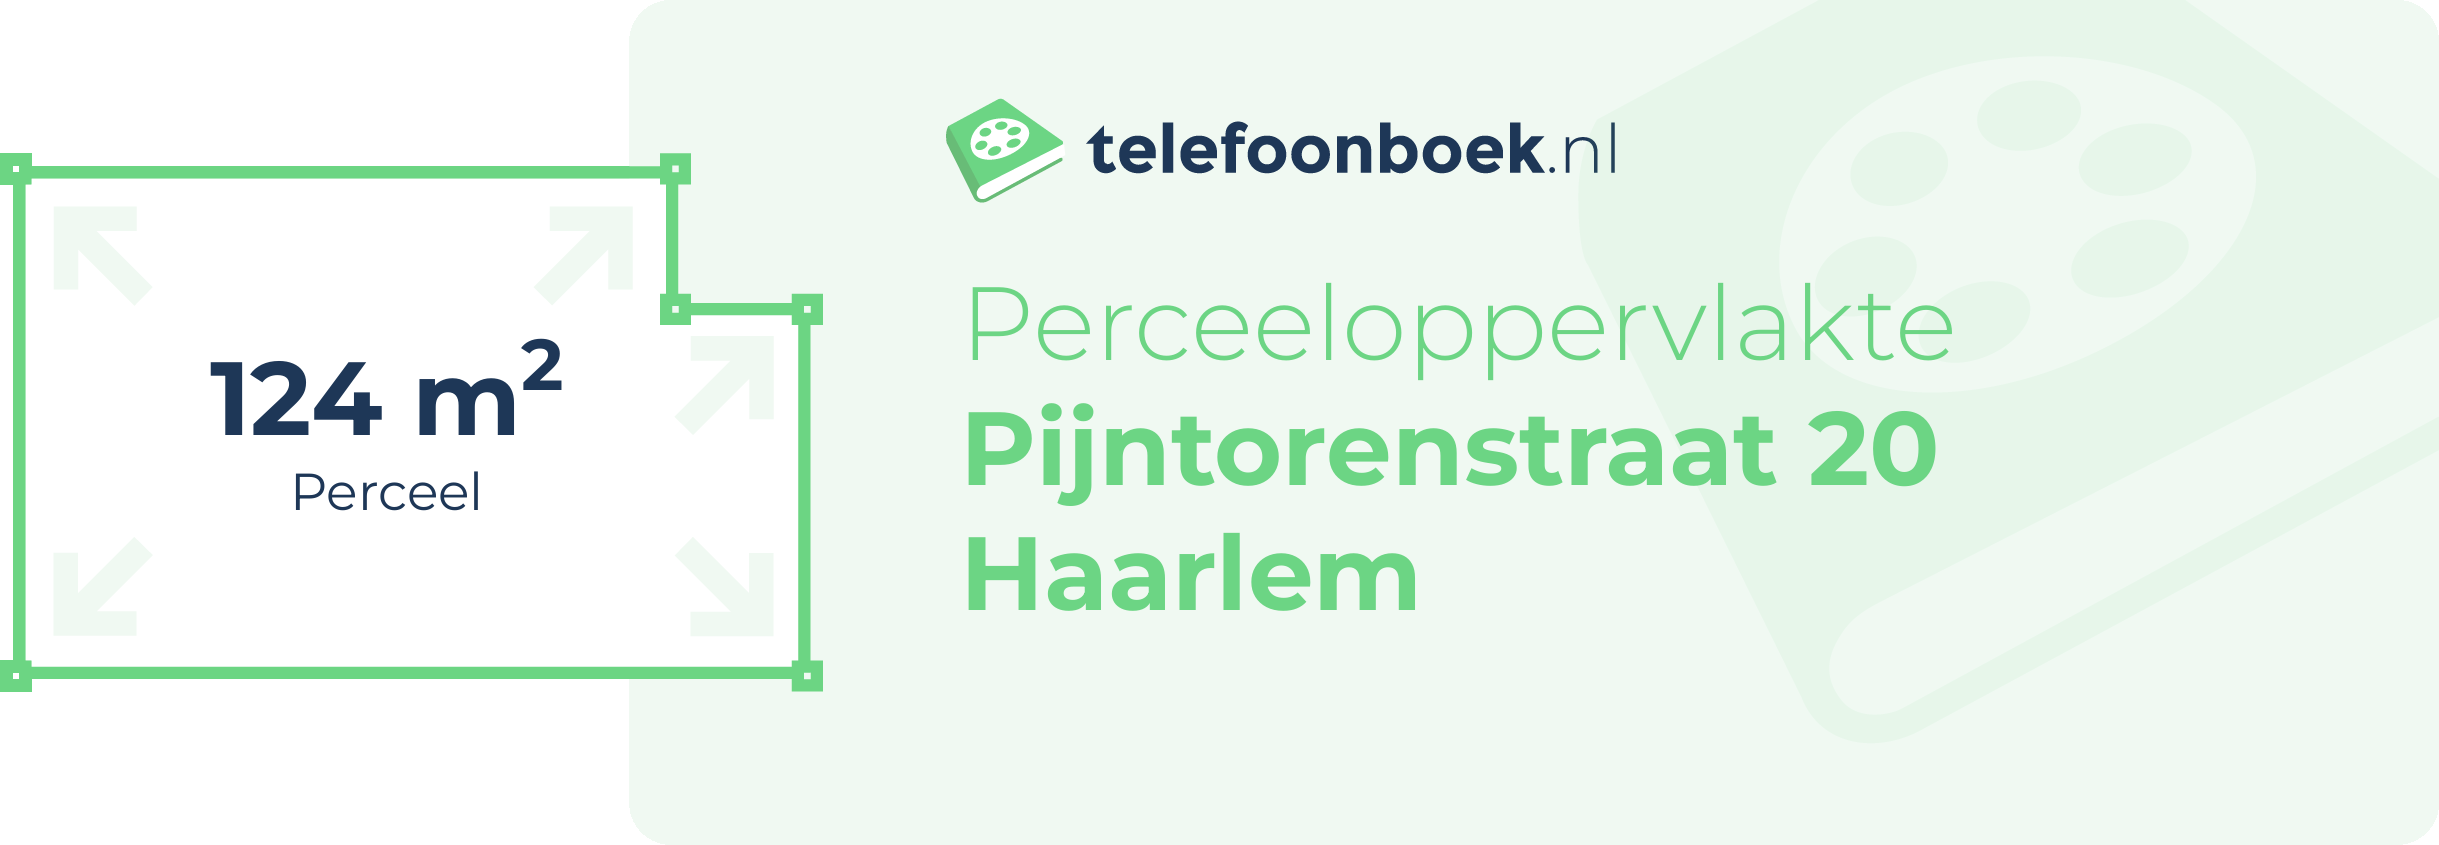 Perceeloppervlakte Pijntorenstraat 20 Haarlem